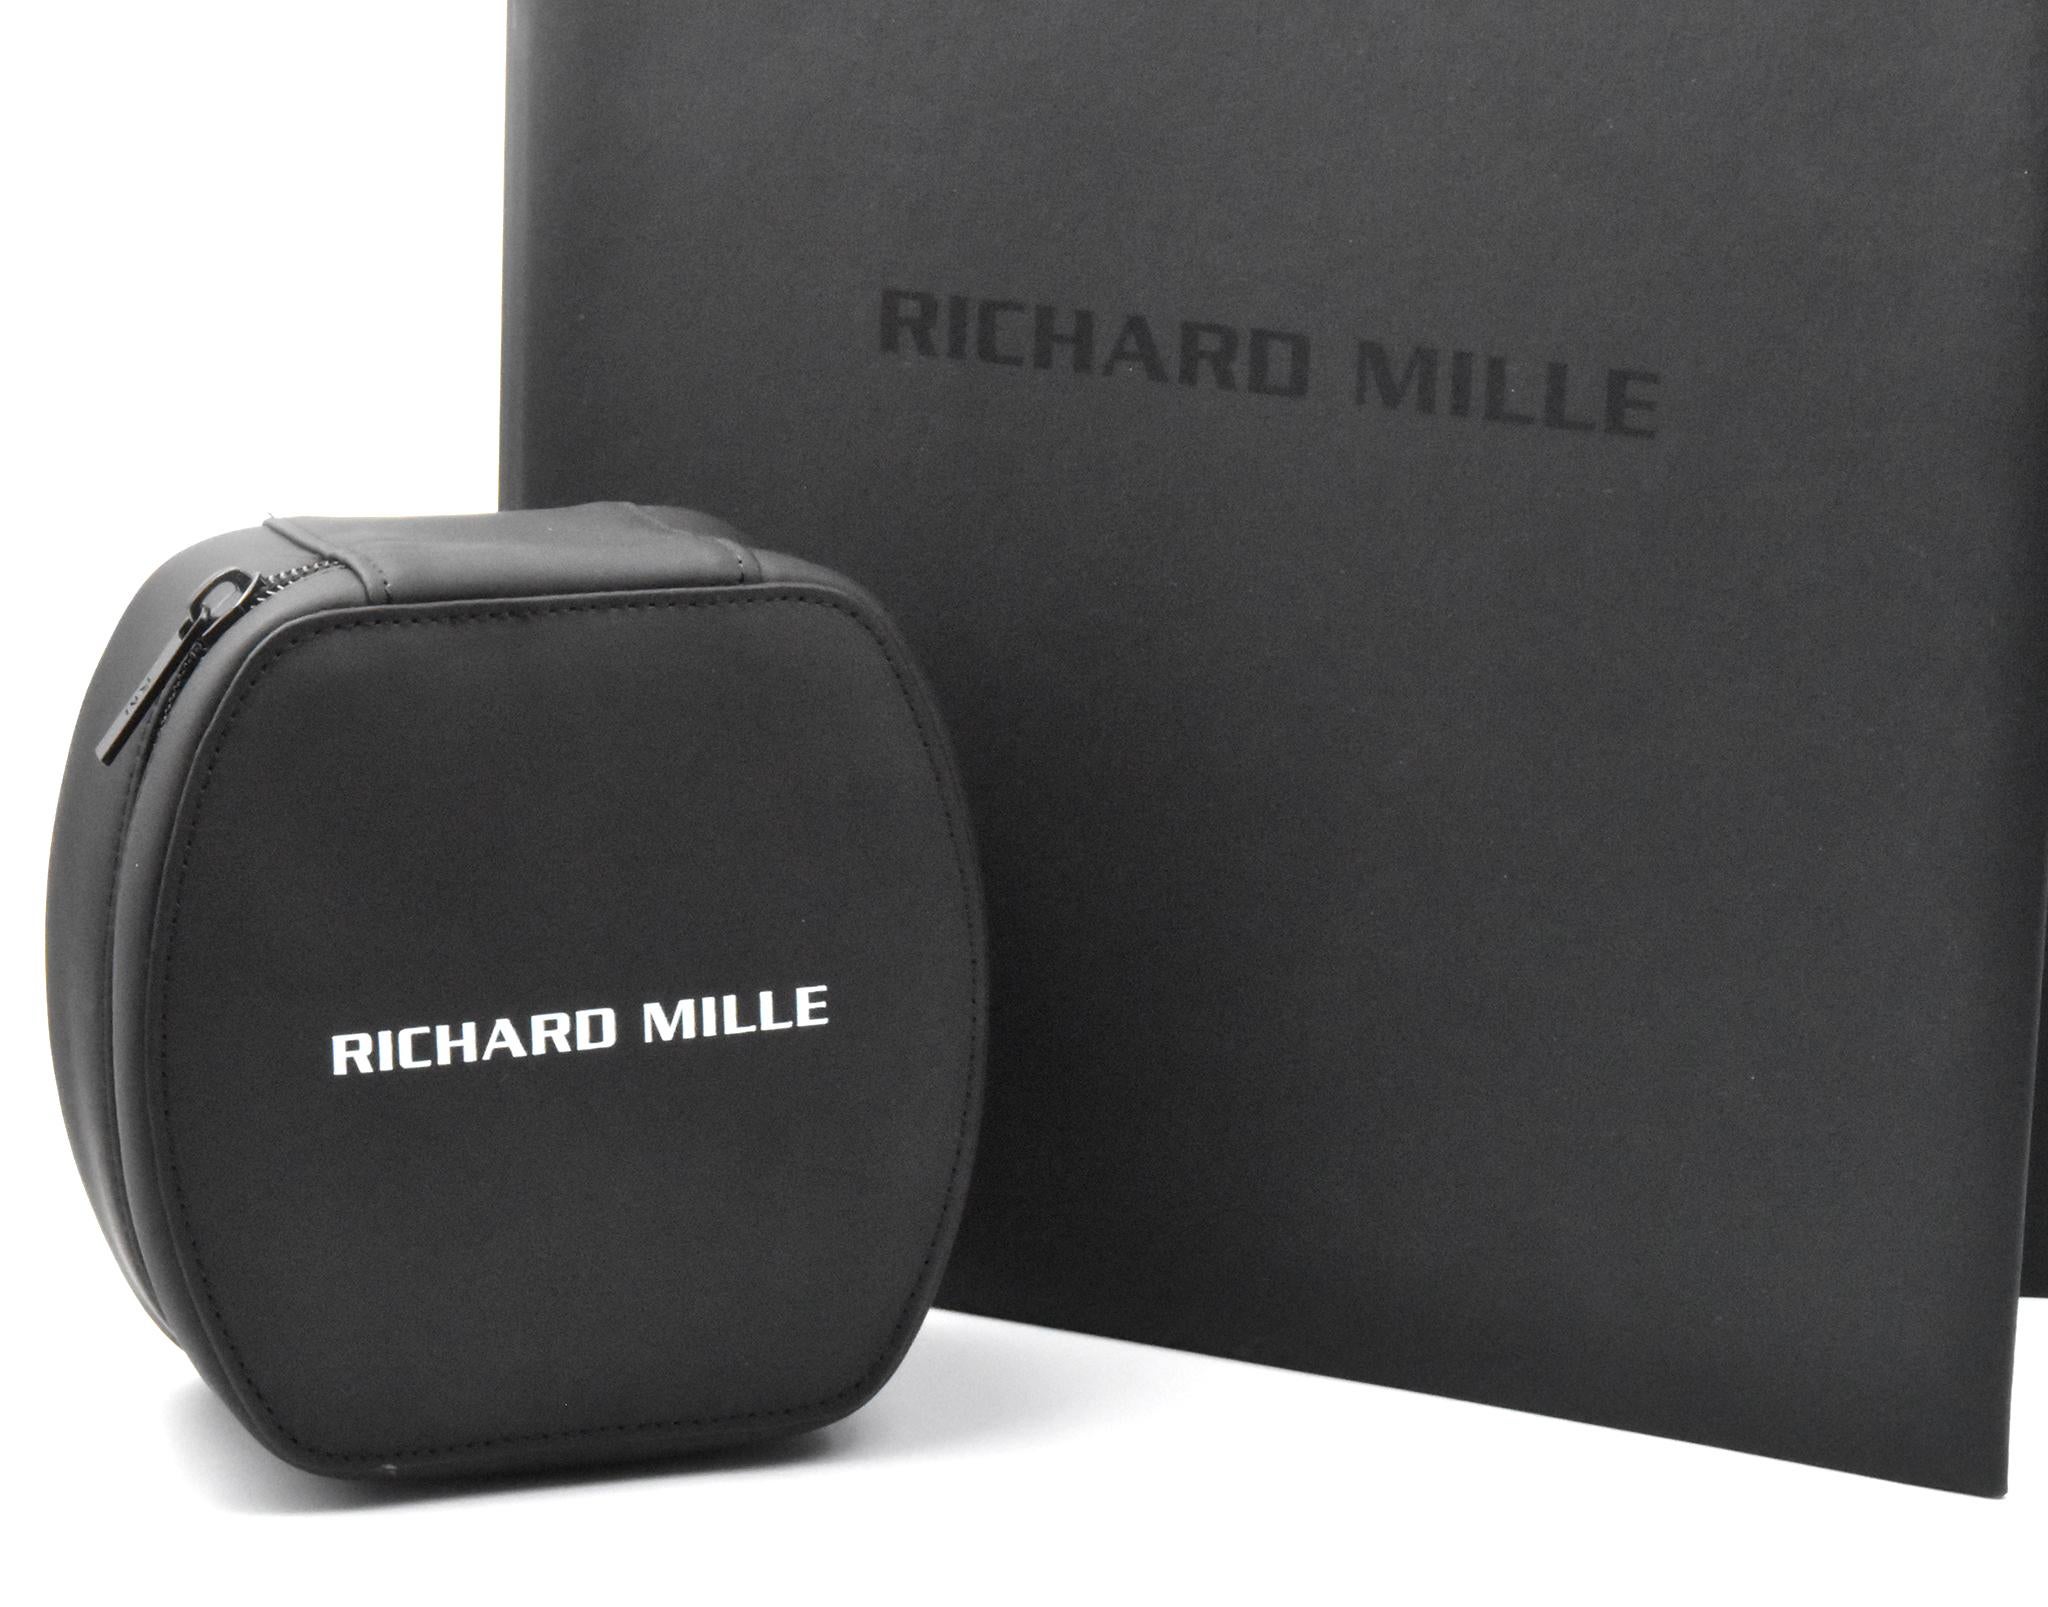 richard mille packaging